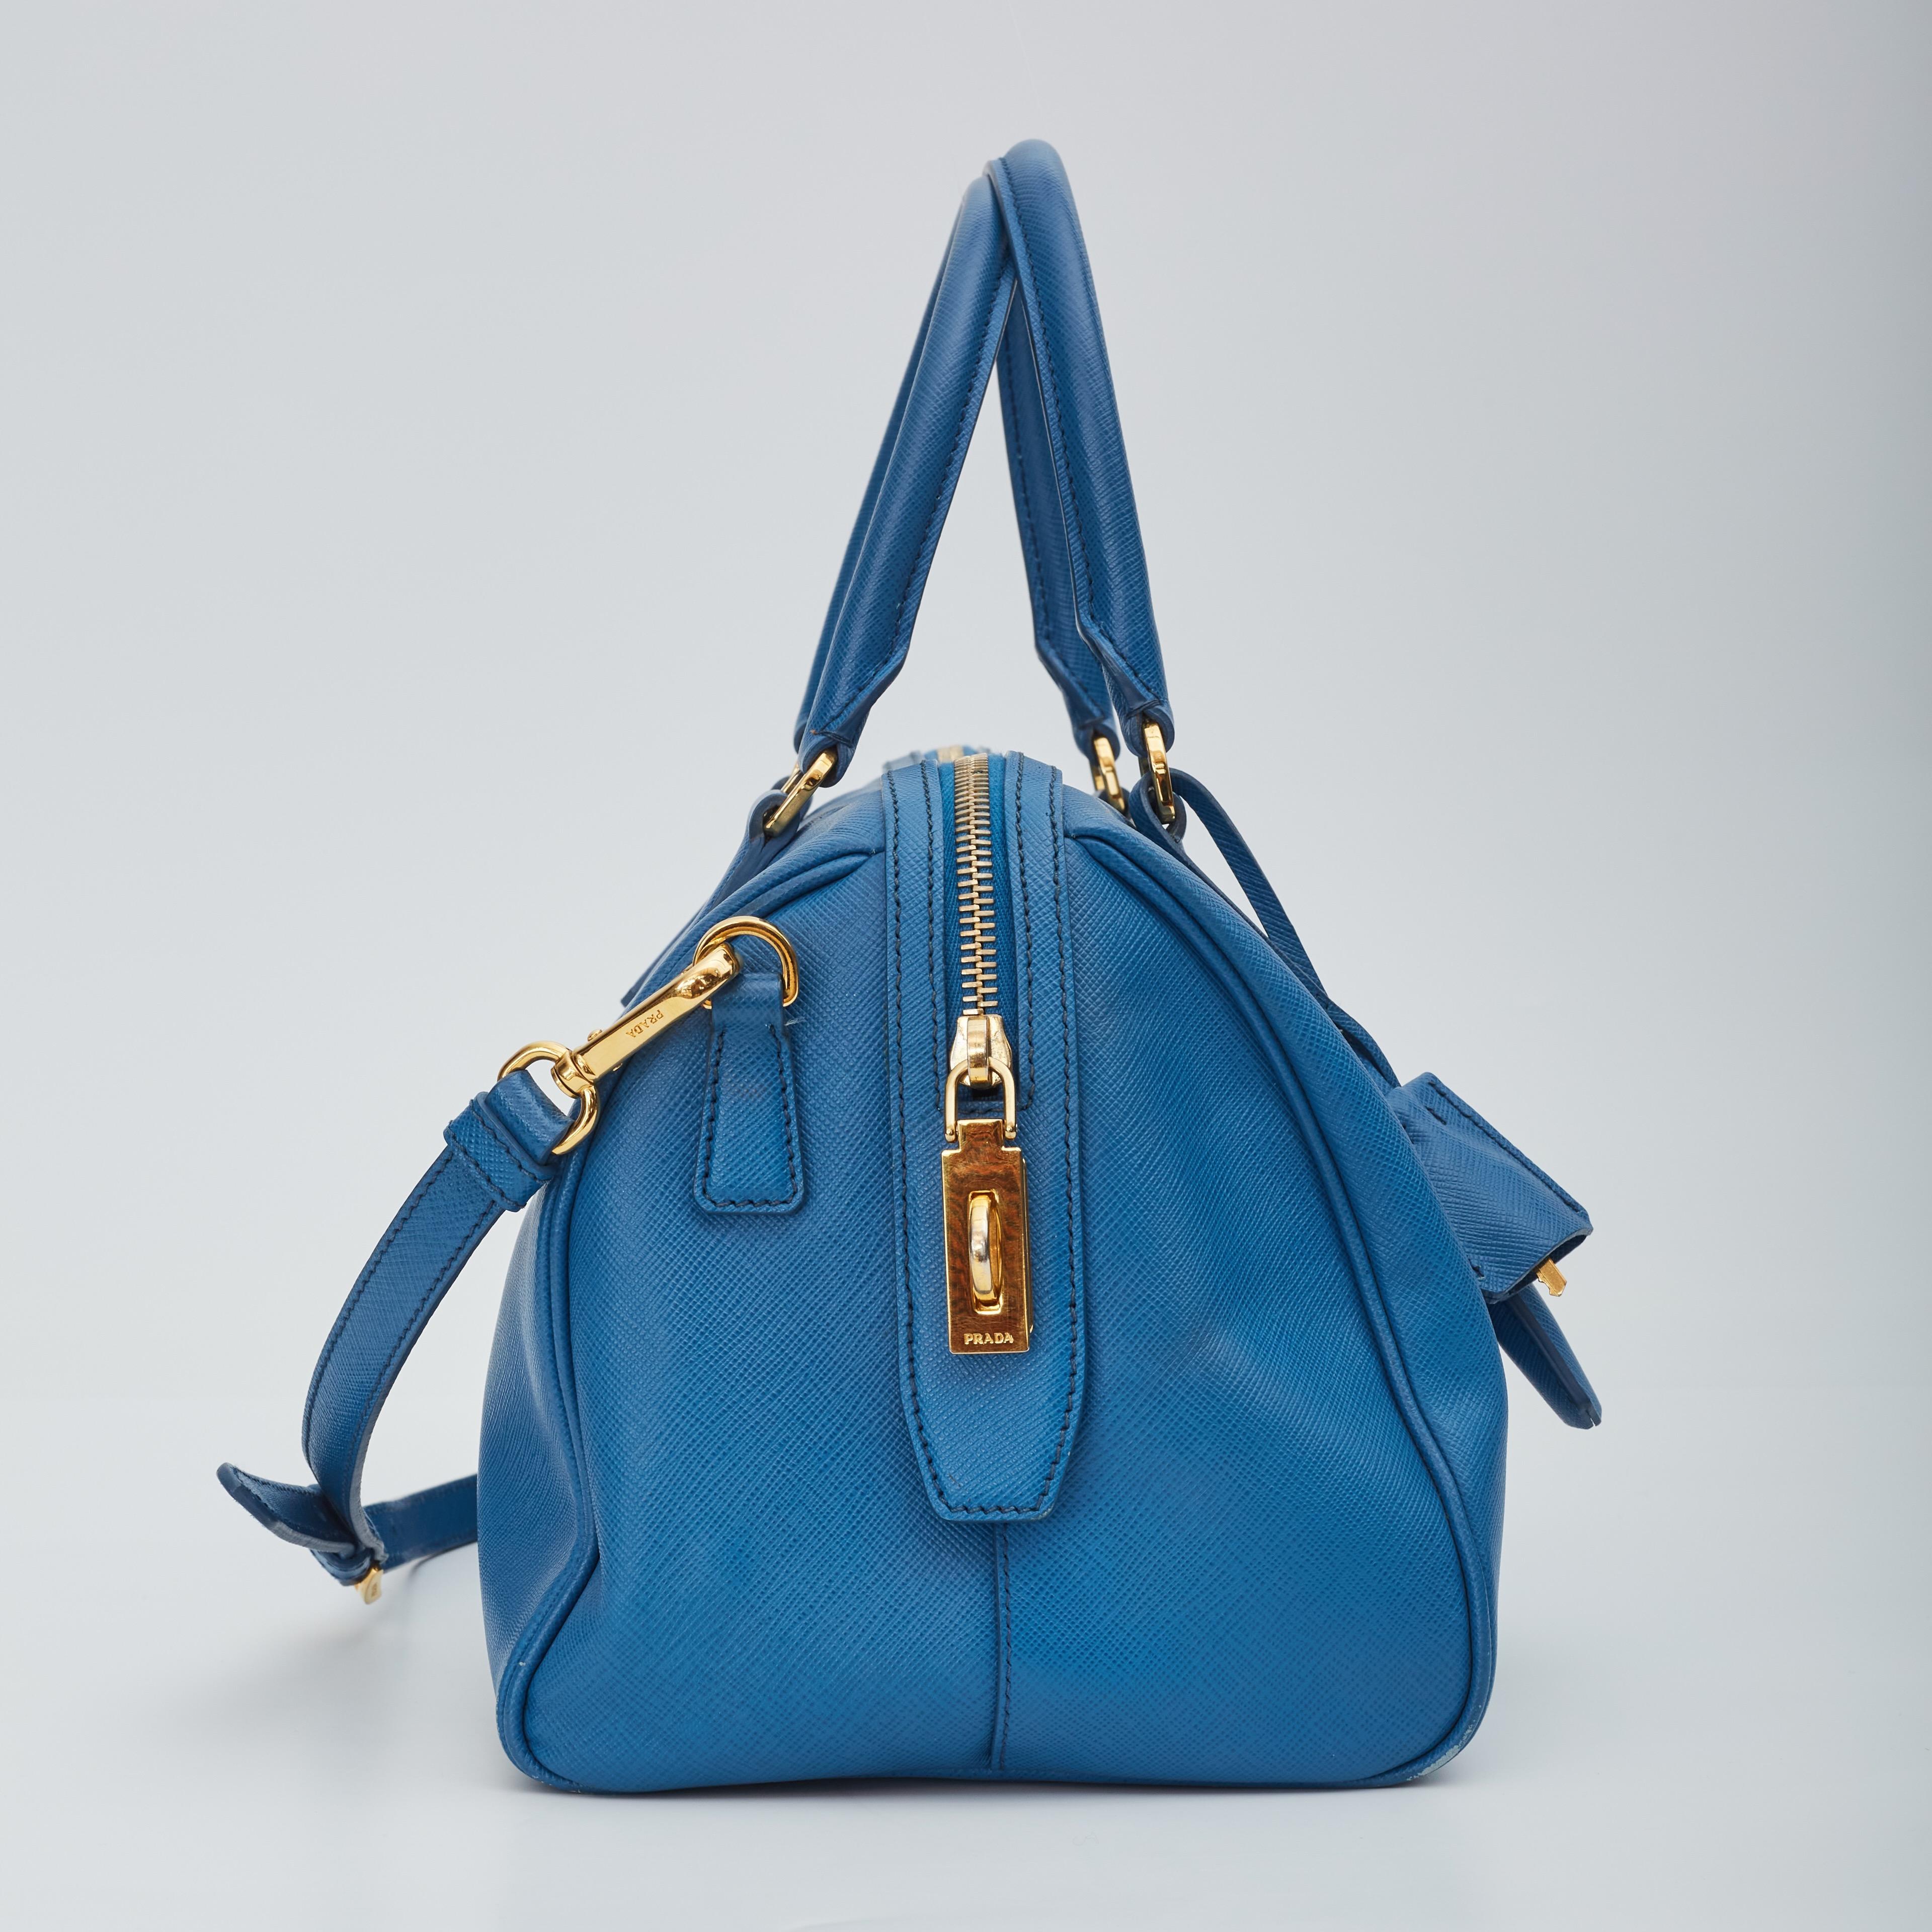 Prada Saffiano Leather Blue Bauletto Boston Bag Round In Good Condition For Sale In Montreal, Quebec